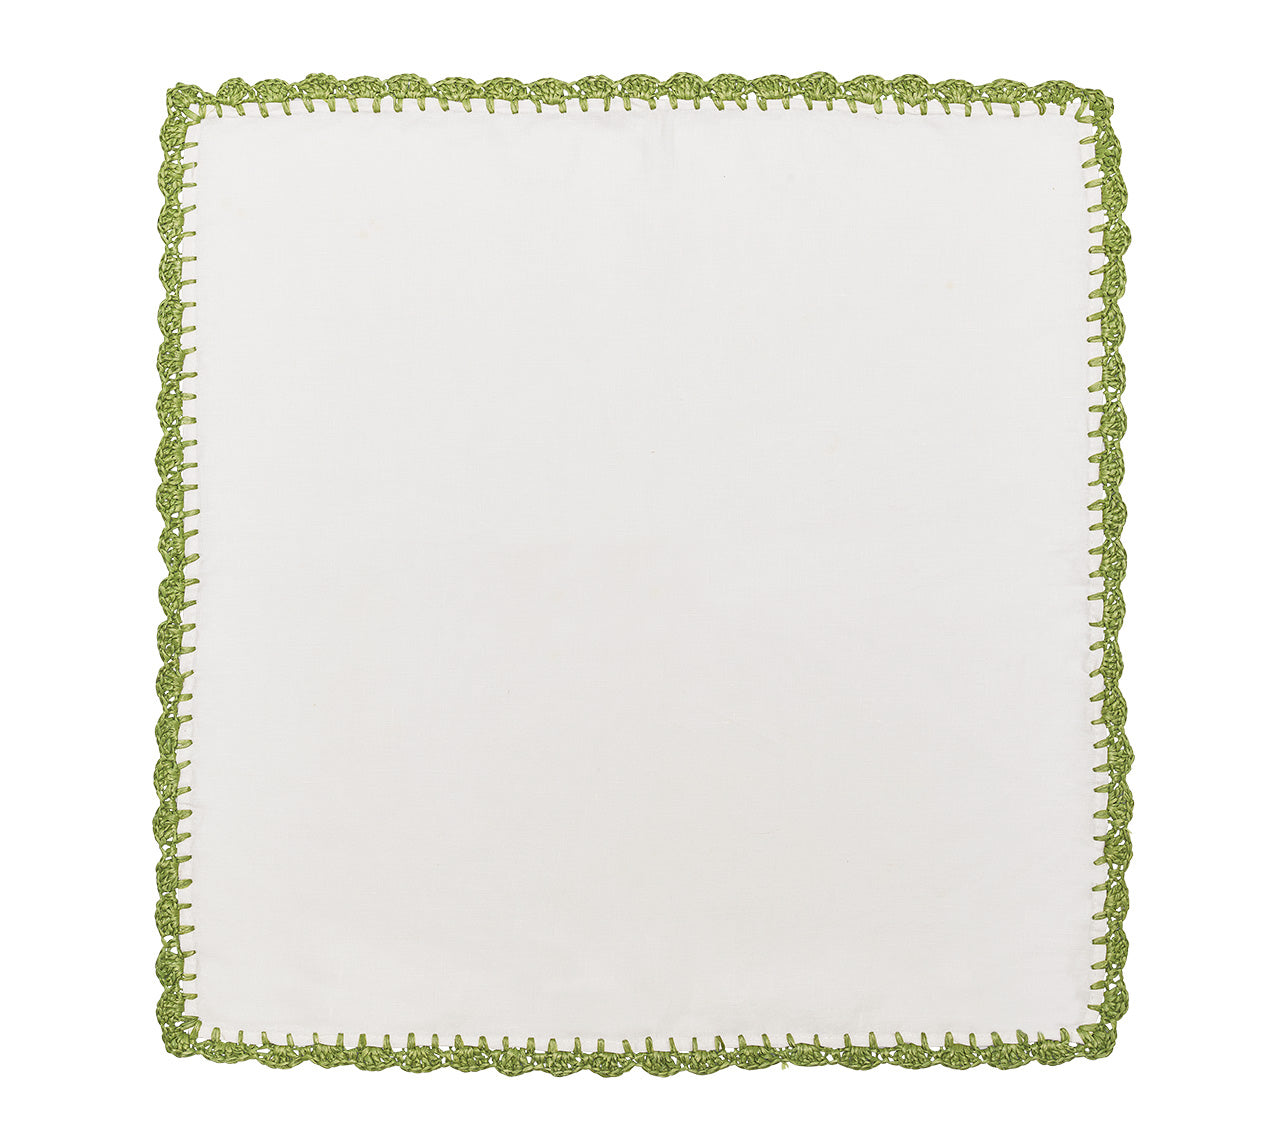 Shell Edge Napkin in White & Green, Set of 4